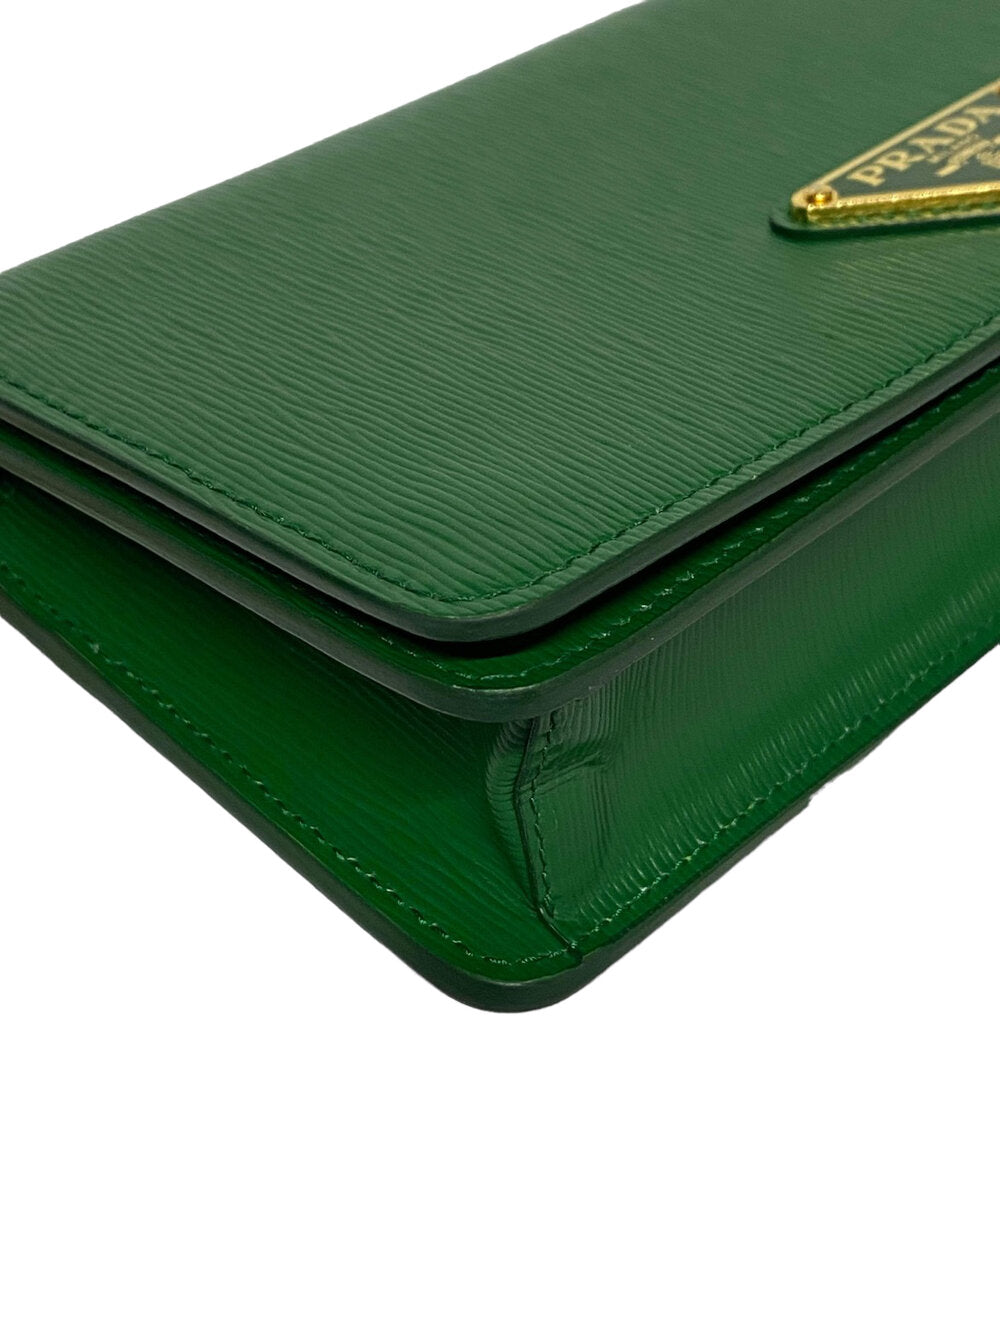 PRADA - Vitello Move Green Leather